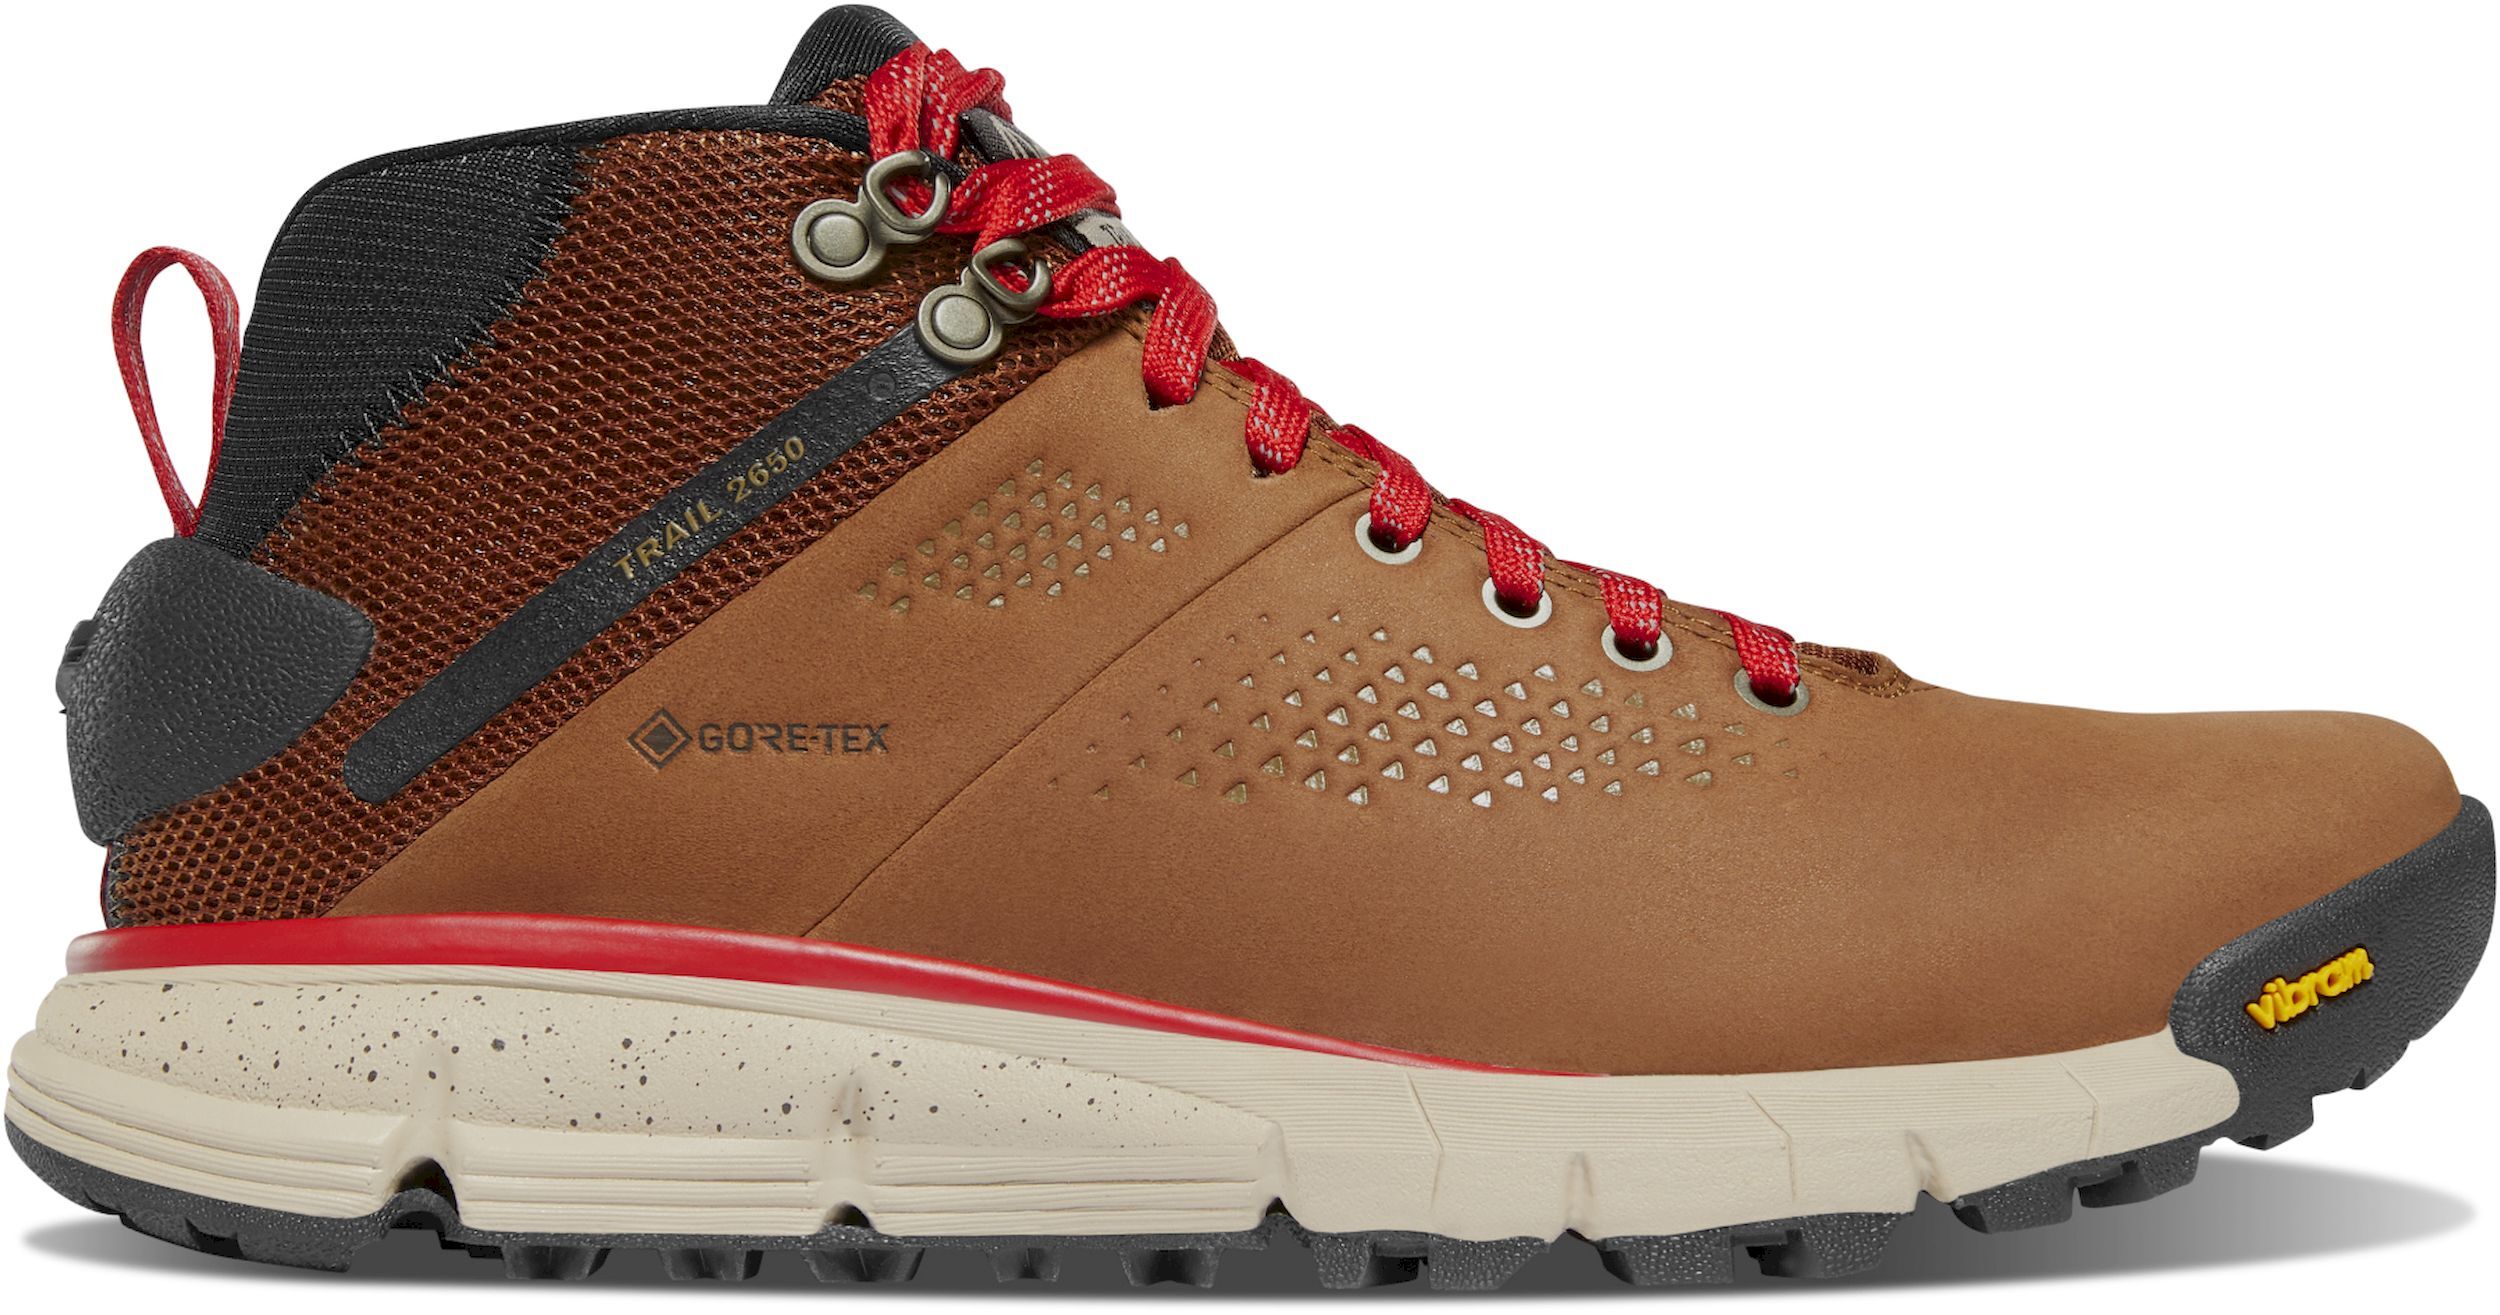 Danner Women's Trail 2650 Mid 4" GTX - Hiking shoes - Women's